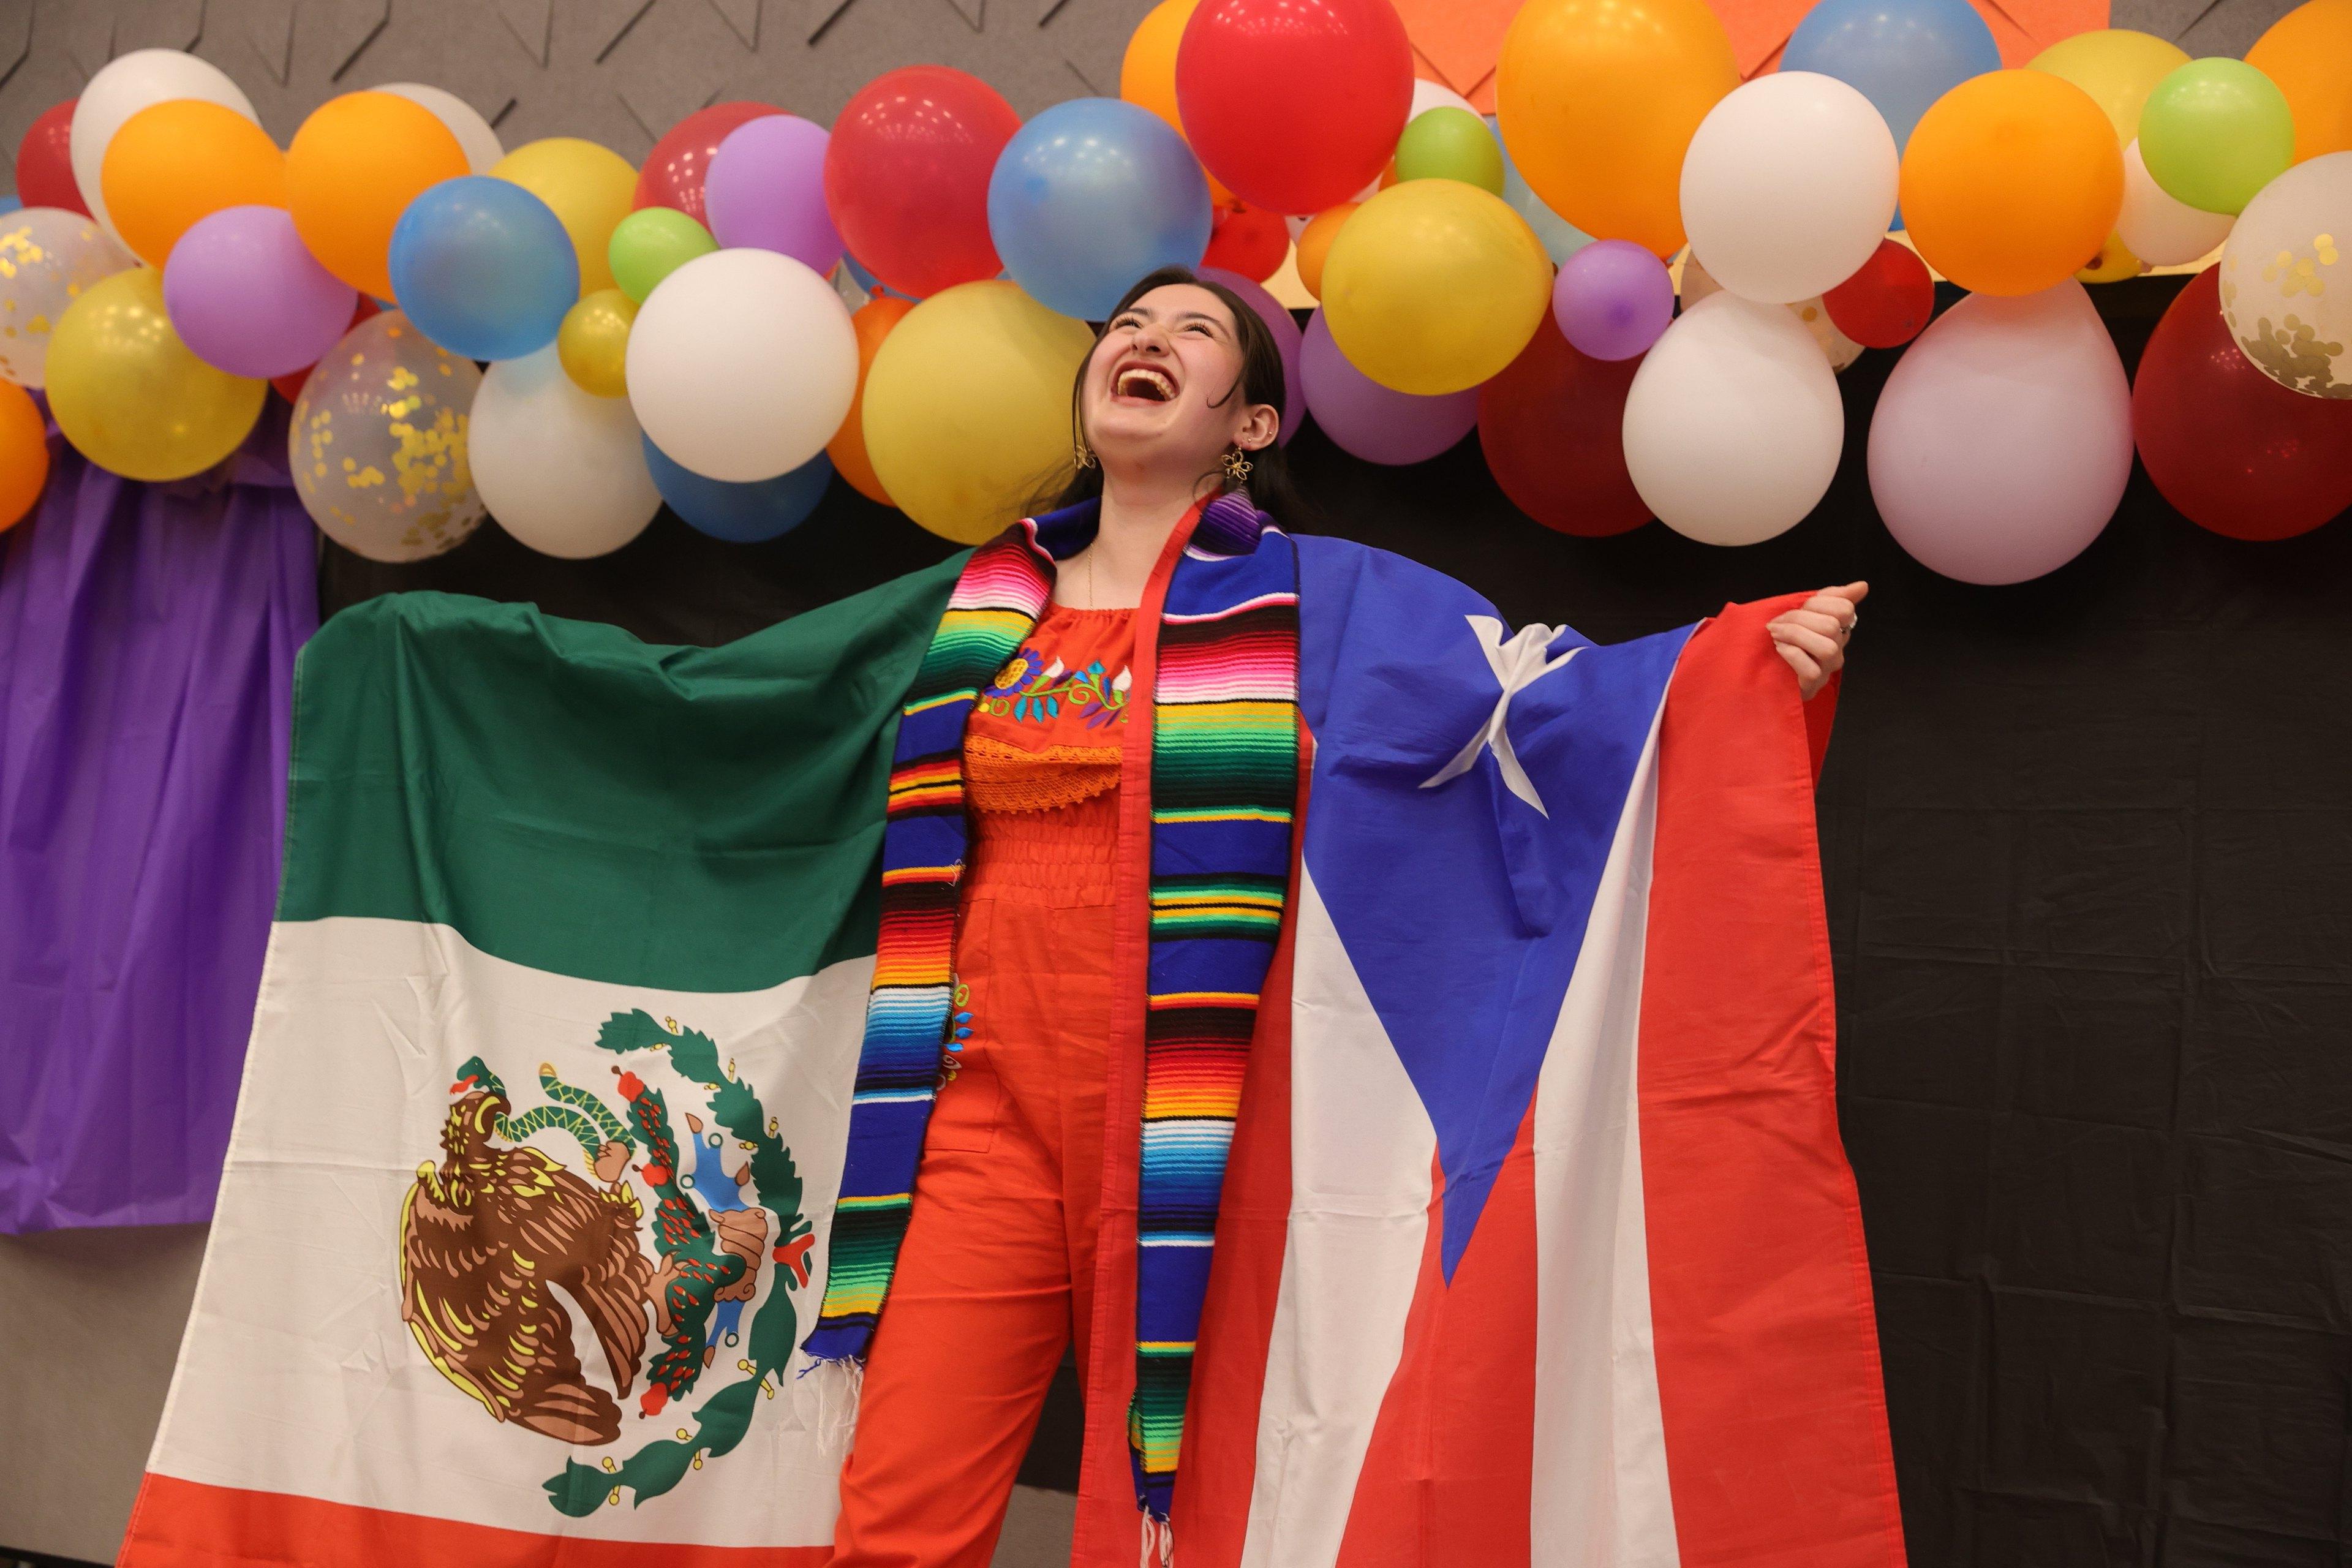  Student celebrates Latinx culture